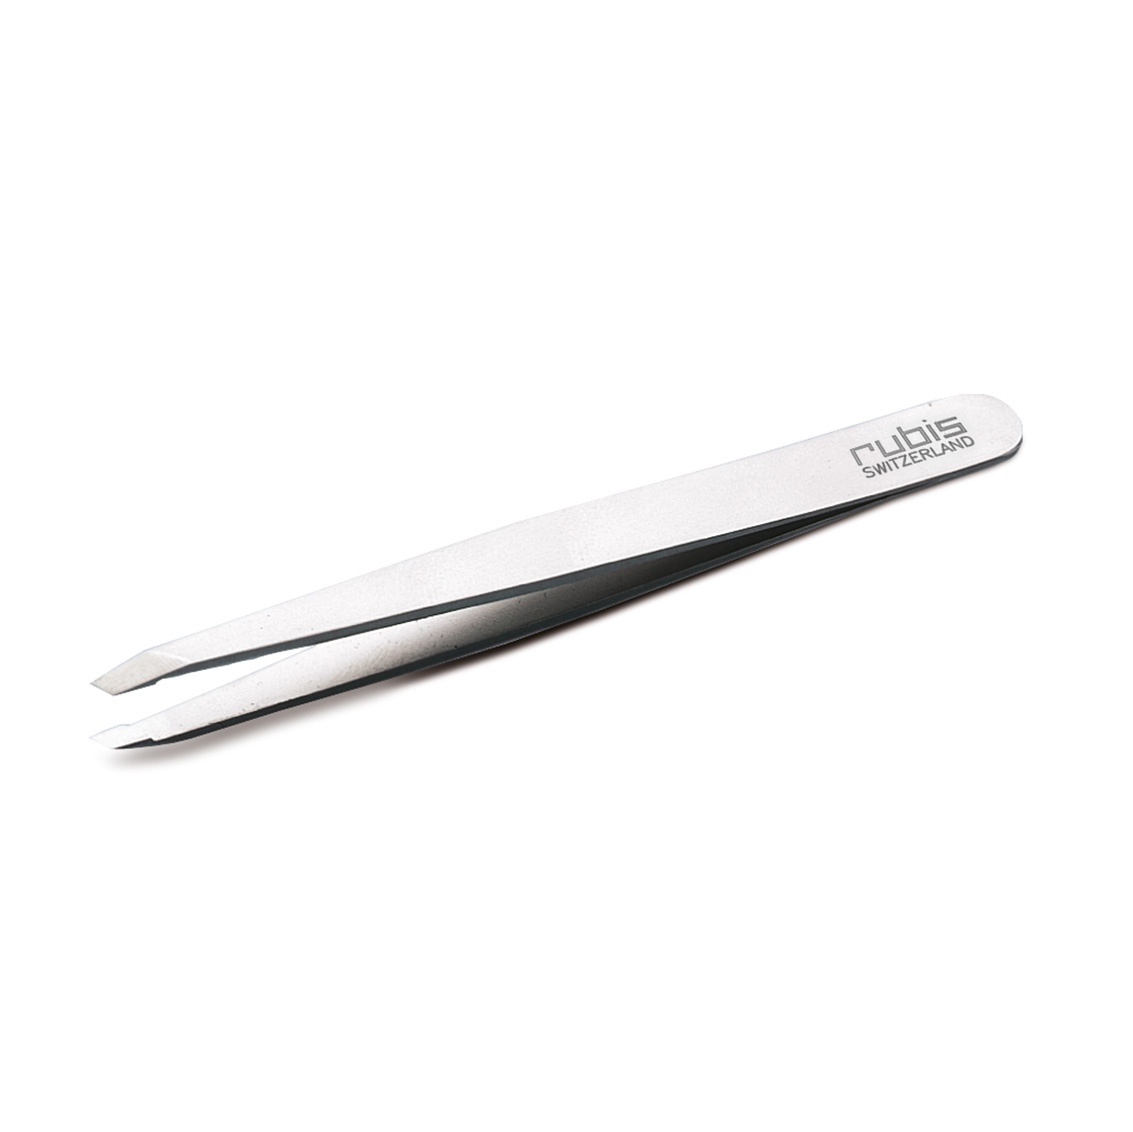 Rubis Professional Stainless Steel Eyebrow Tweezers with slant tip